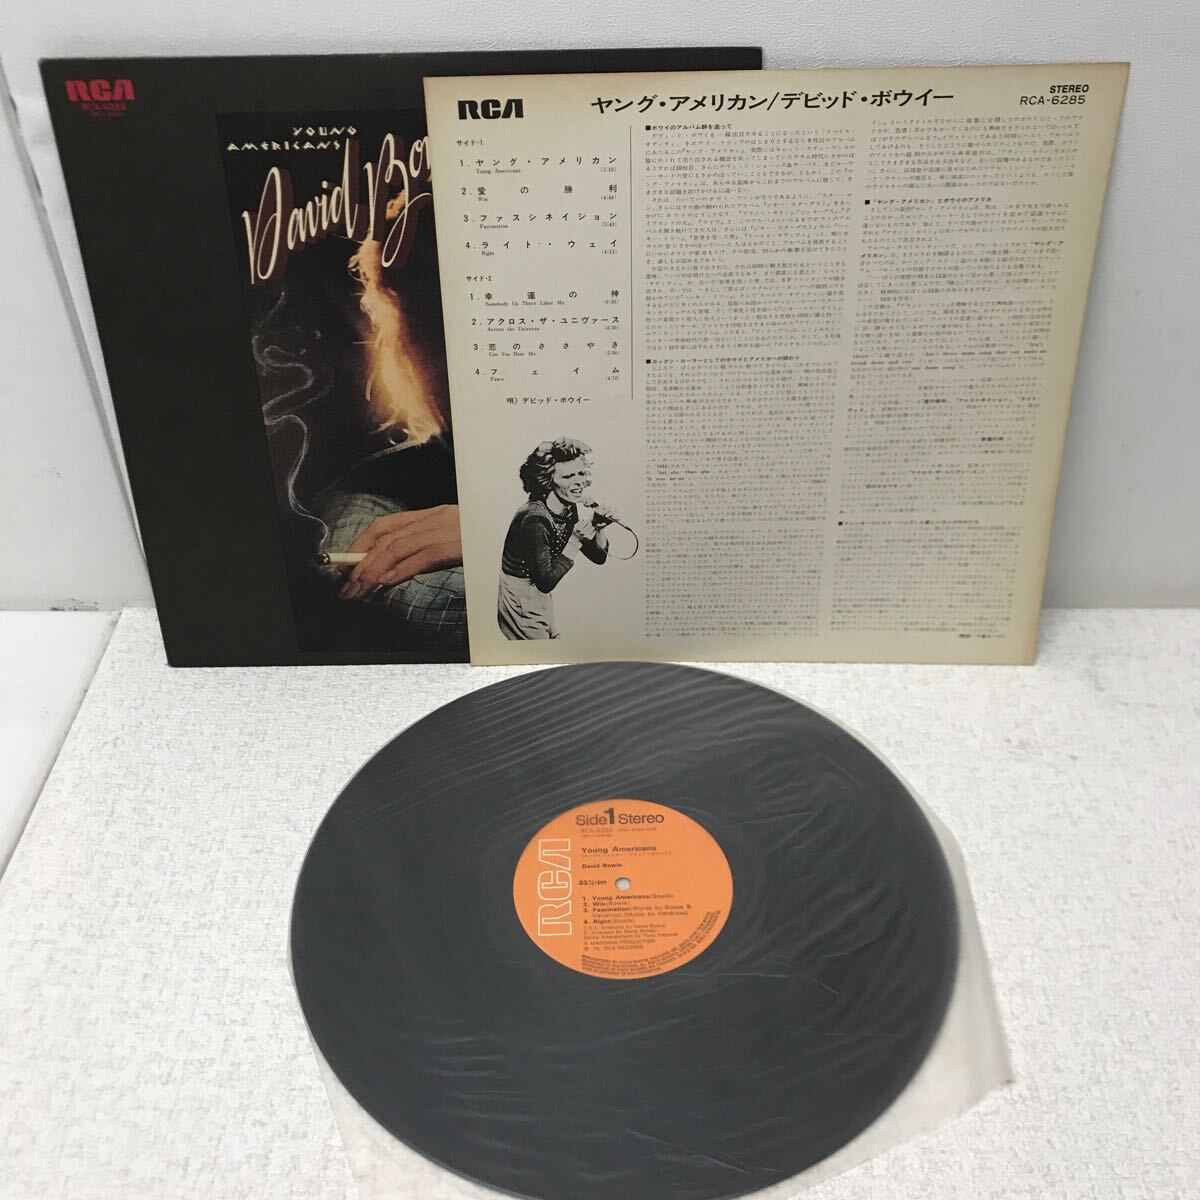 I0516A3 デビッド・ボウイー DAVID BOWIE ヤング・アメリカン YOUNG AMERICANS LP レコード 音楽 洋楽 RCA-6285 国内盤 _画像3